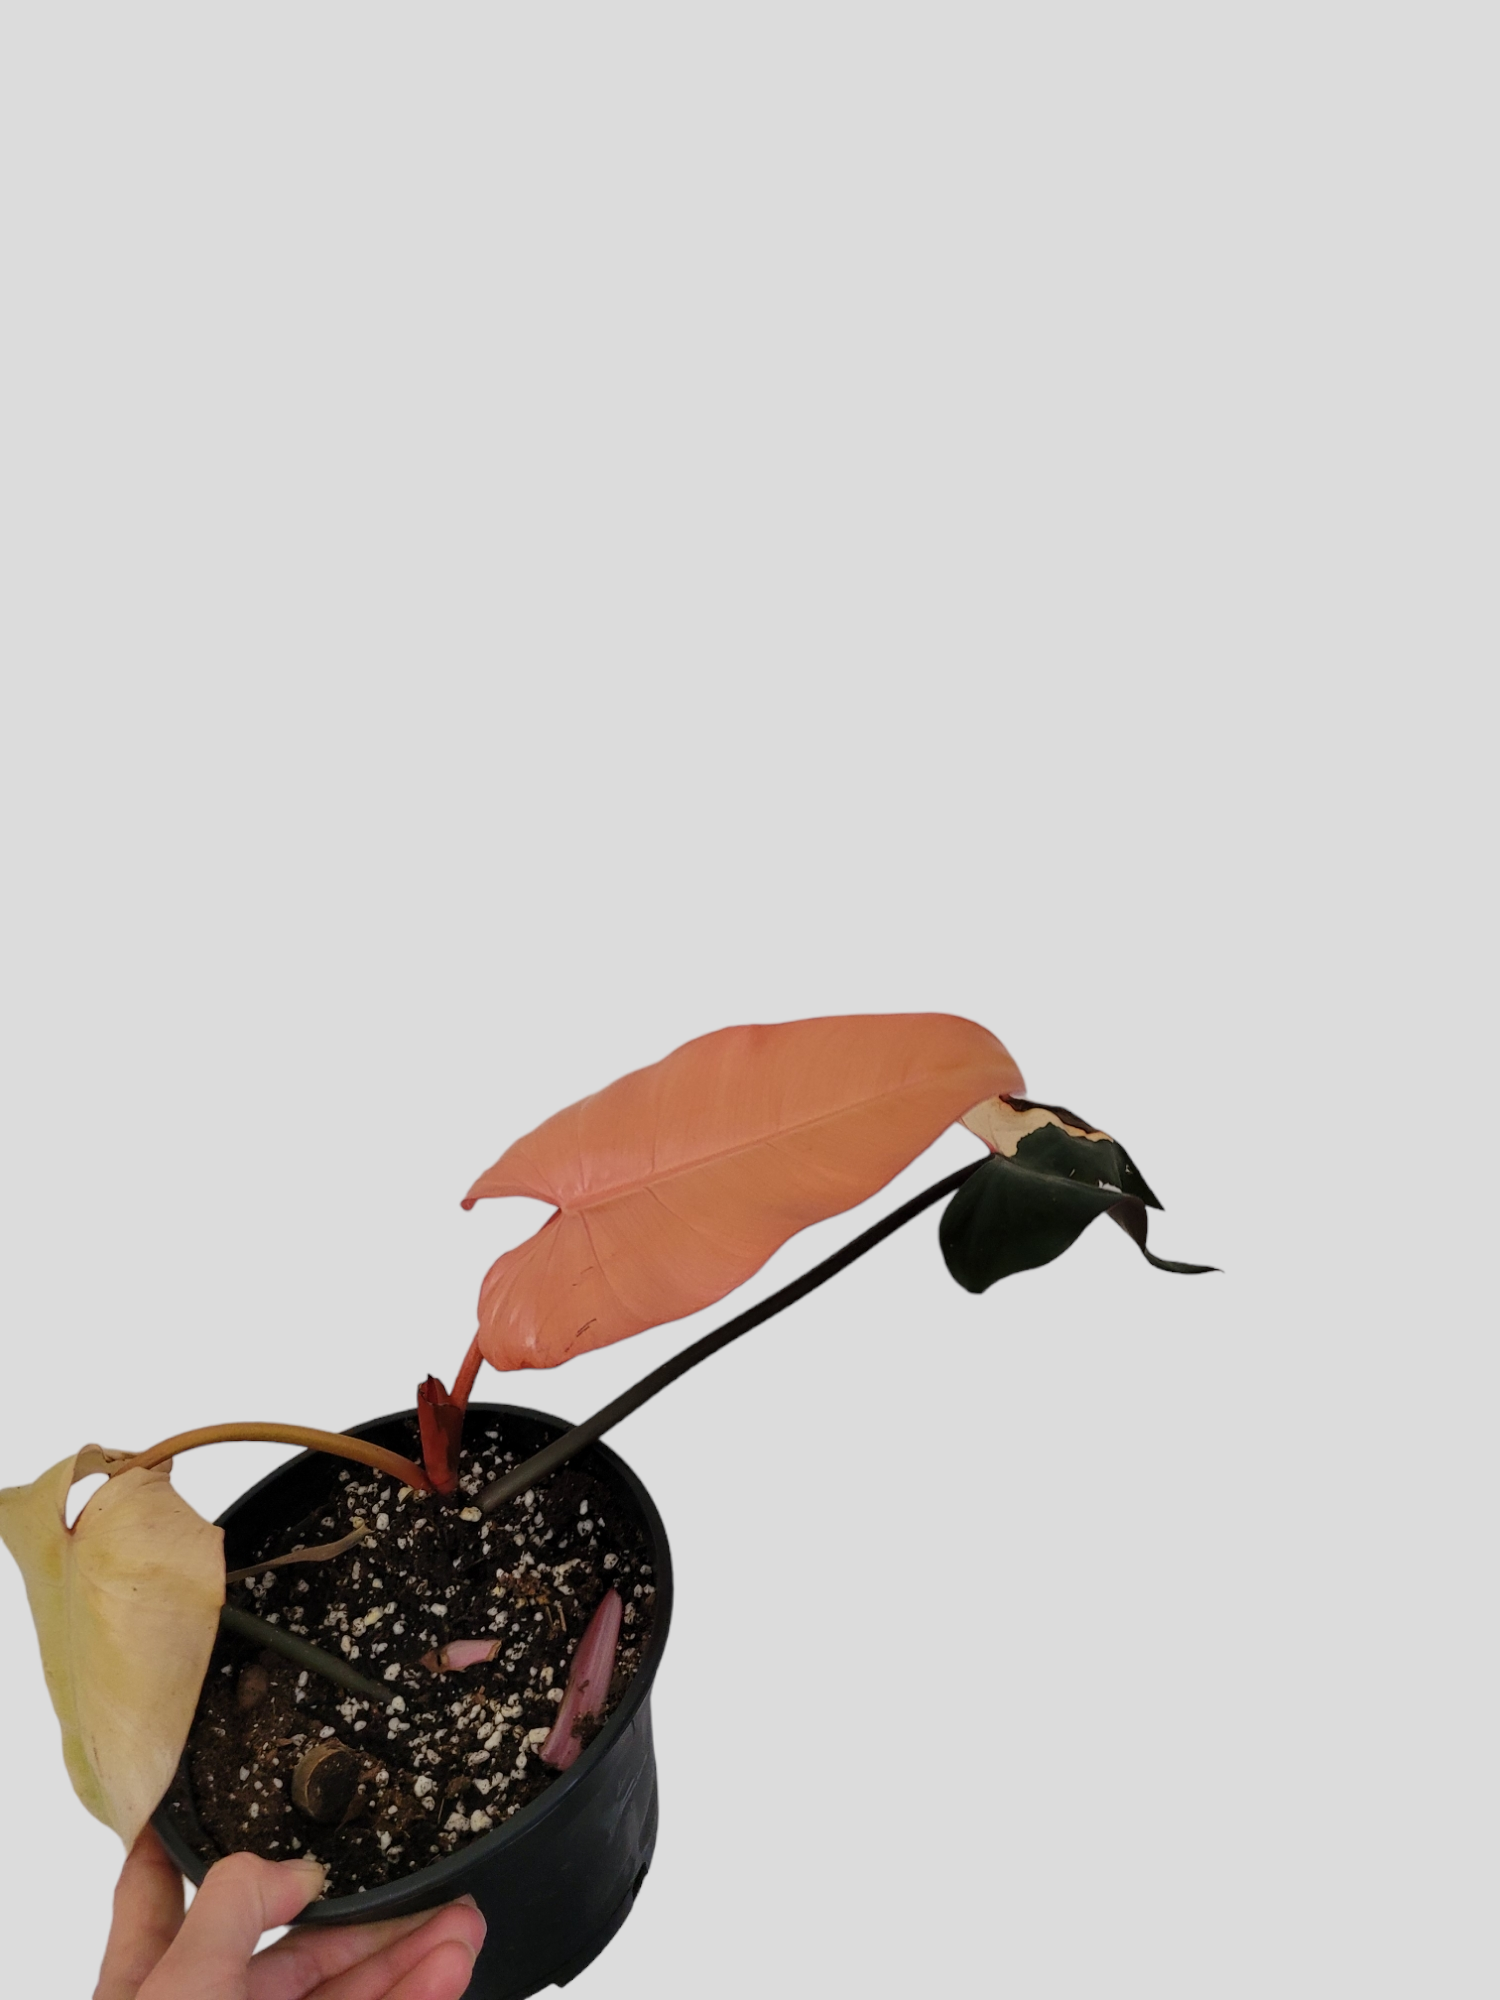 Philodendron majesty variegata